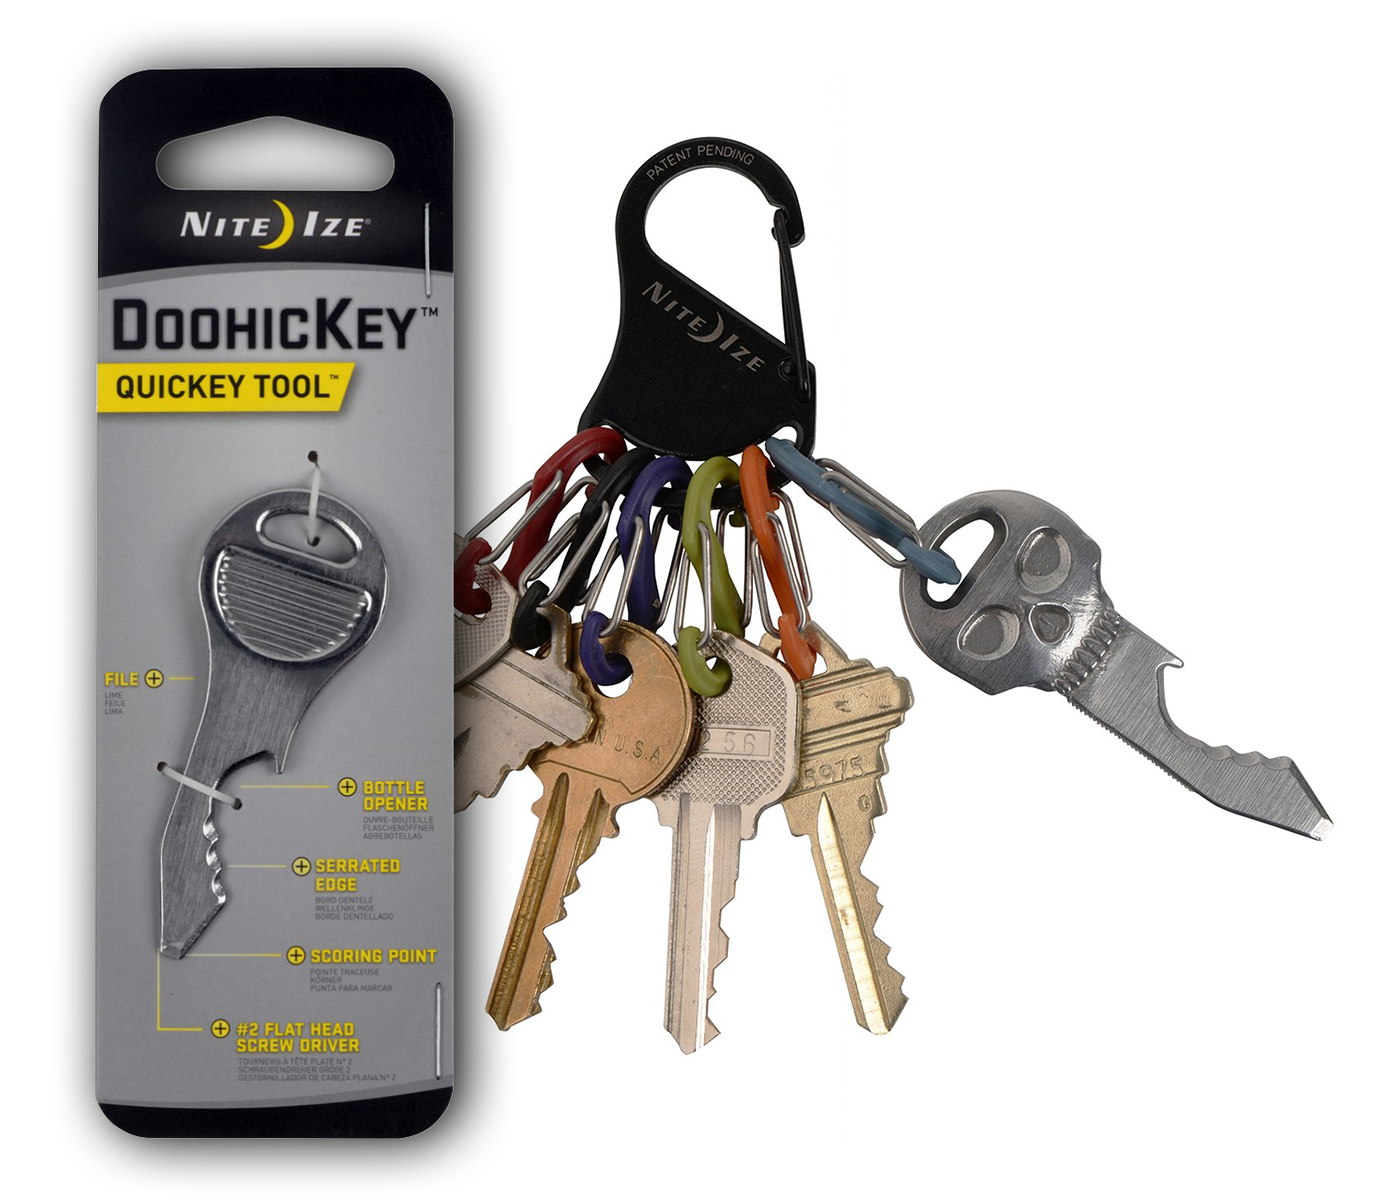 key tool multitool invention keyring pocket steel opener indiegogo trident design bottle opener screwdriver quickey crowdfund Kickstarter